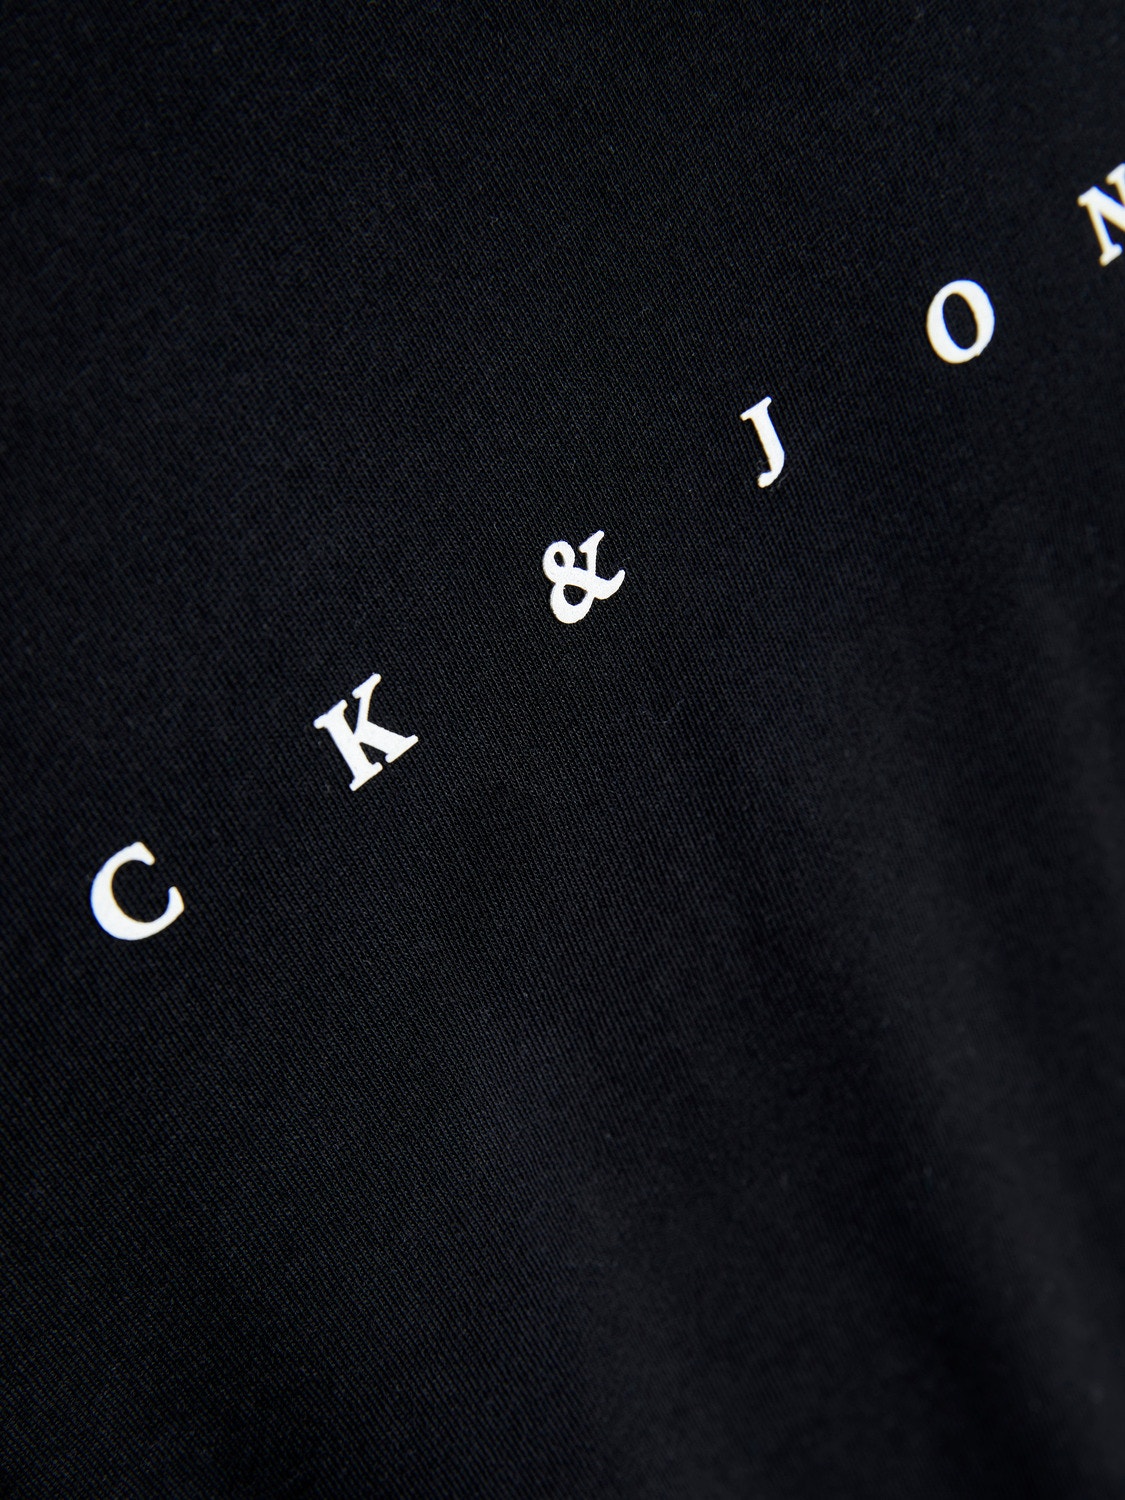 Jack & Jones T-shirt Con logo Girocollo -Black - 12234746